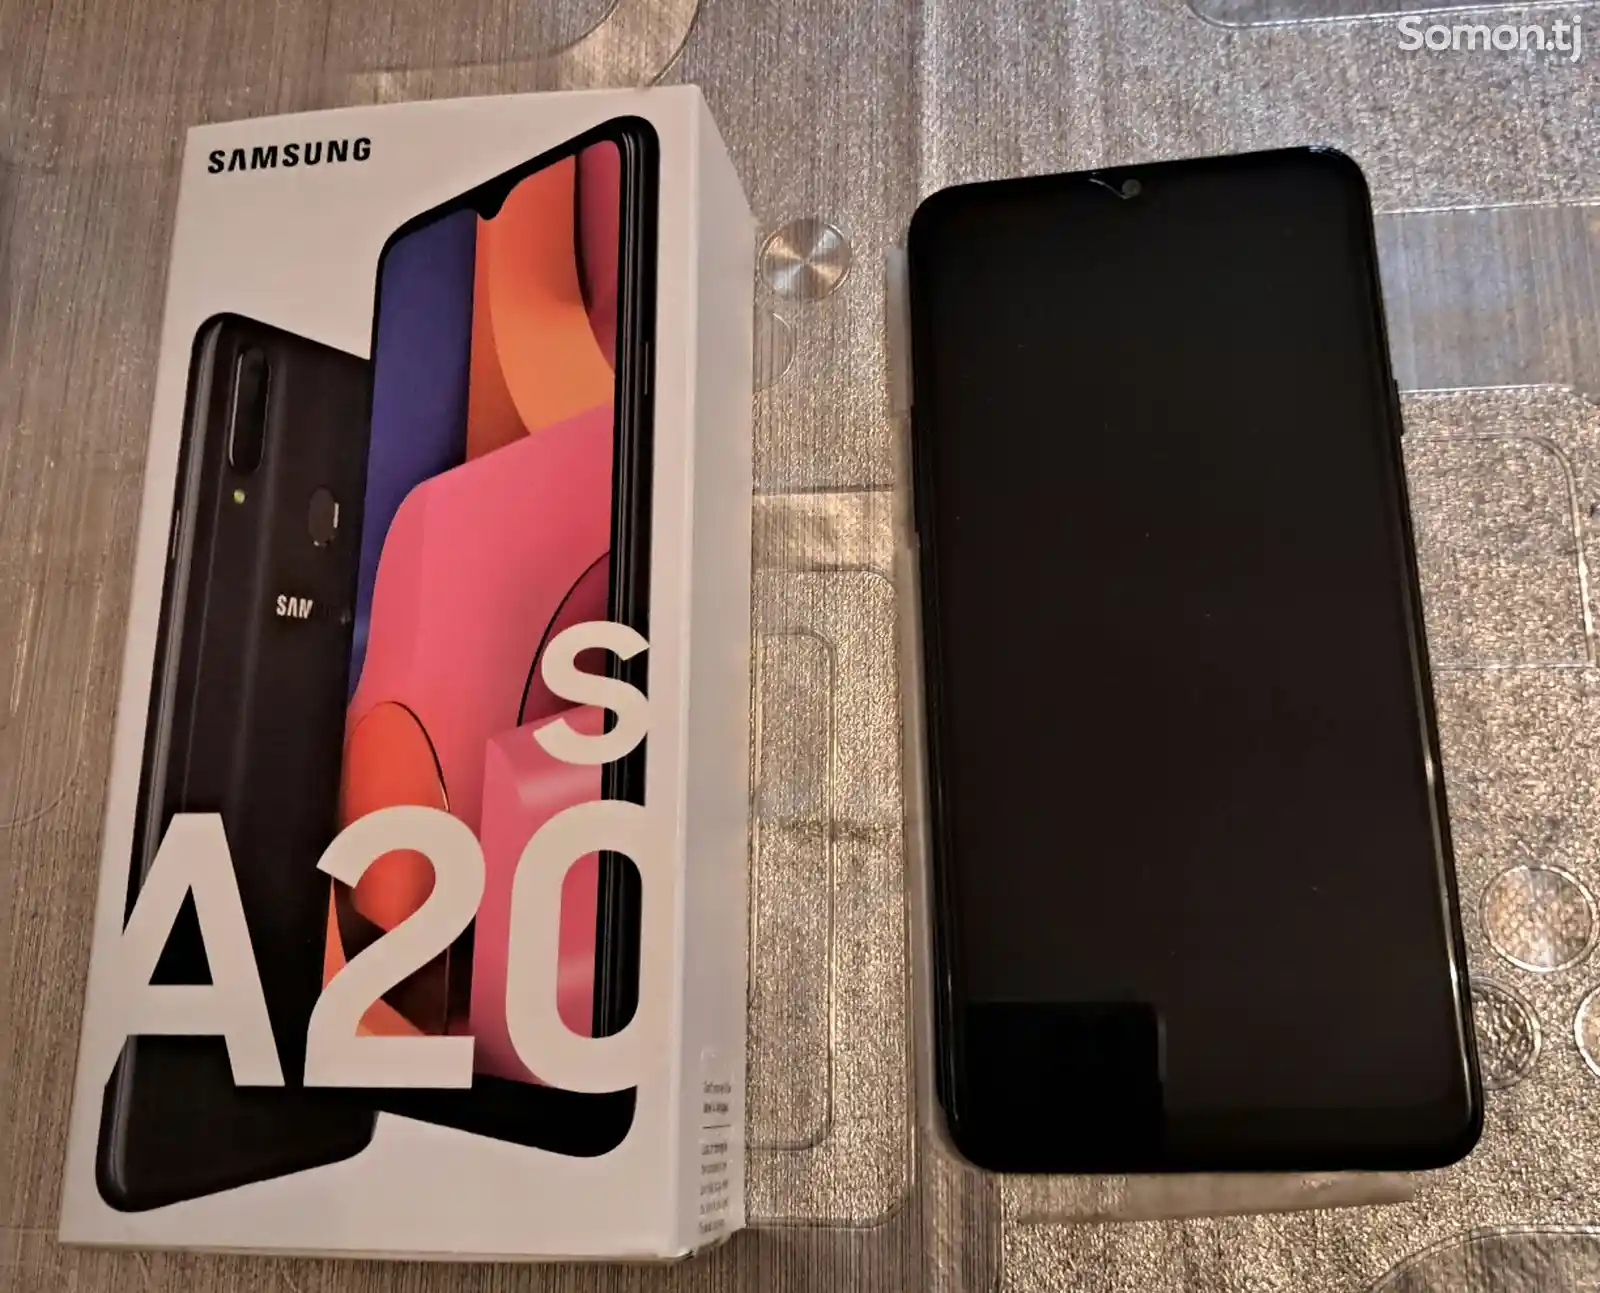 Samsung Galaxy A20s-1